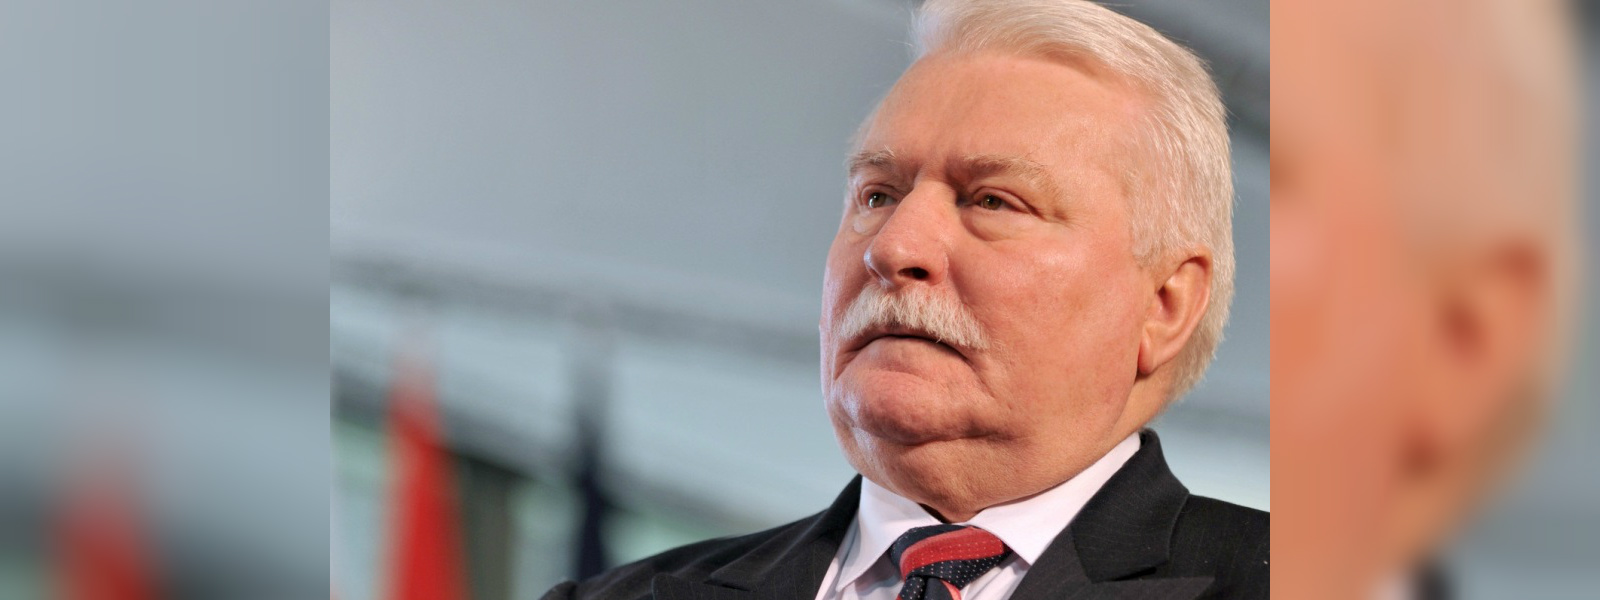 New legislation may lead to civil war: Lech Walesa